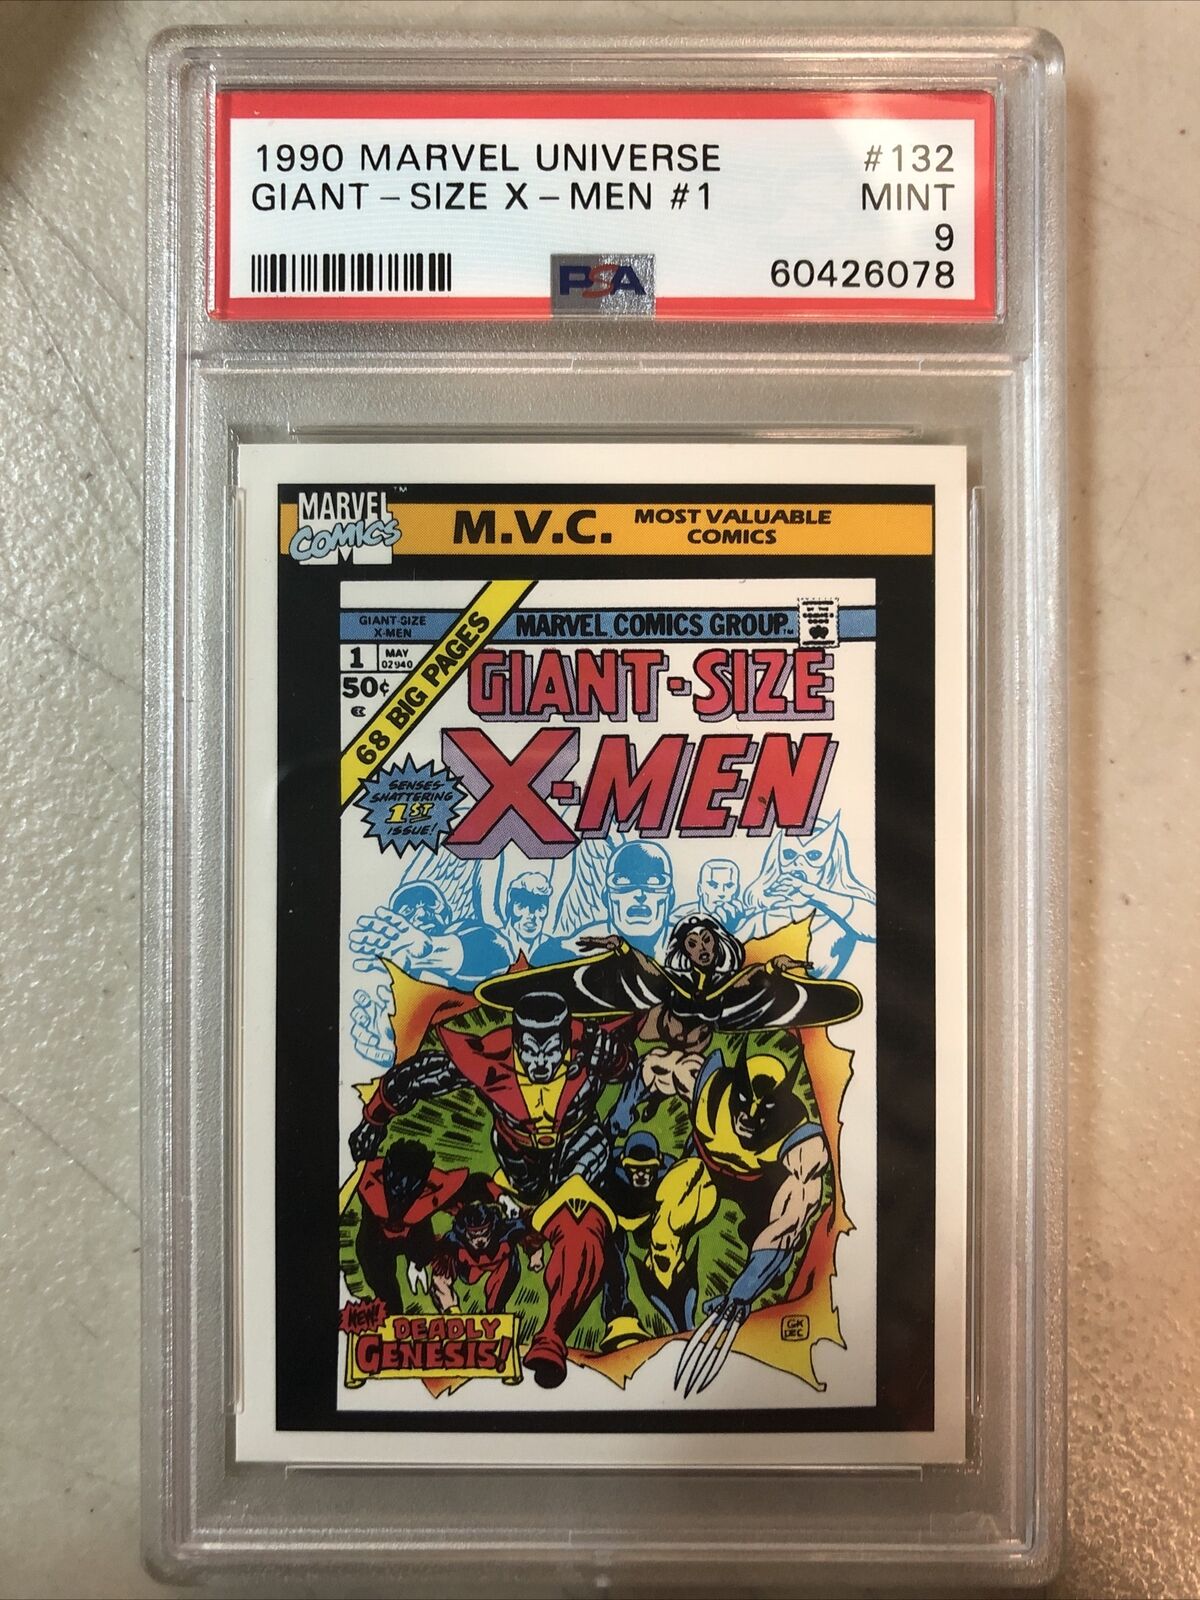 1990 Mavel Universe #132 Giant-Size X-Men #1 26078 Mint 9